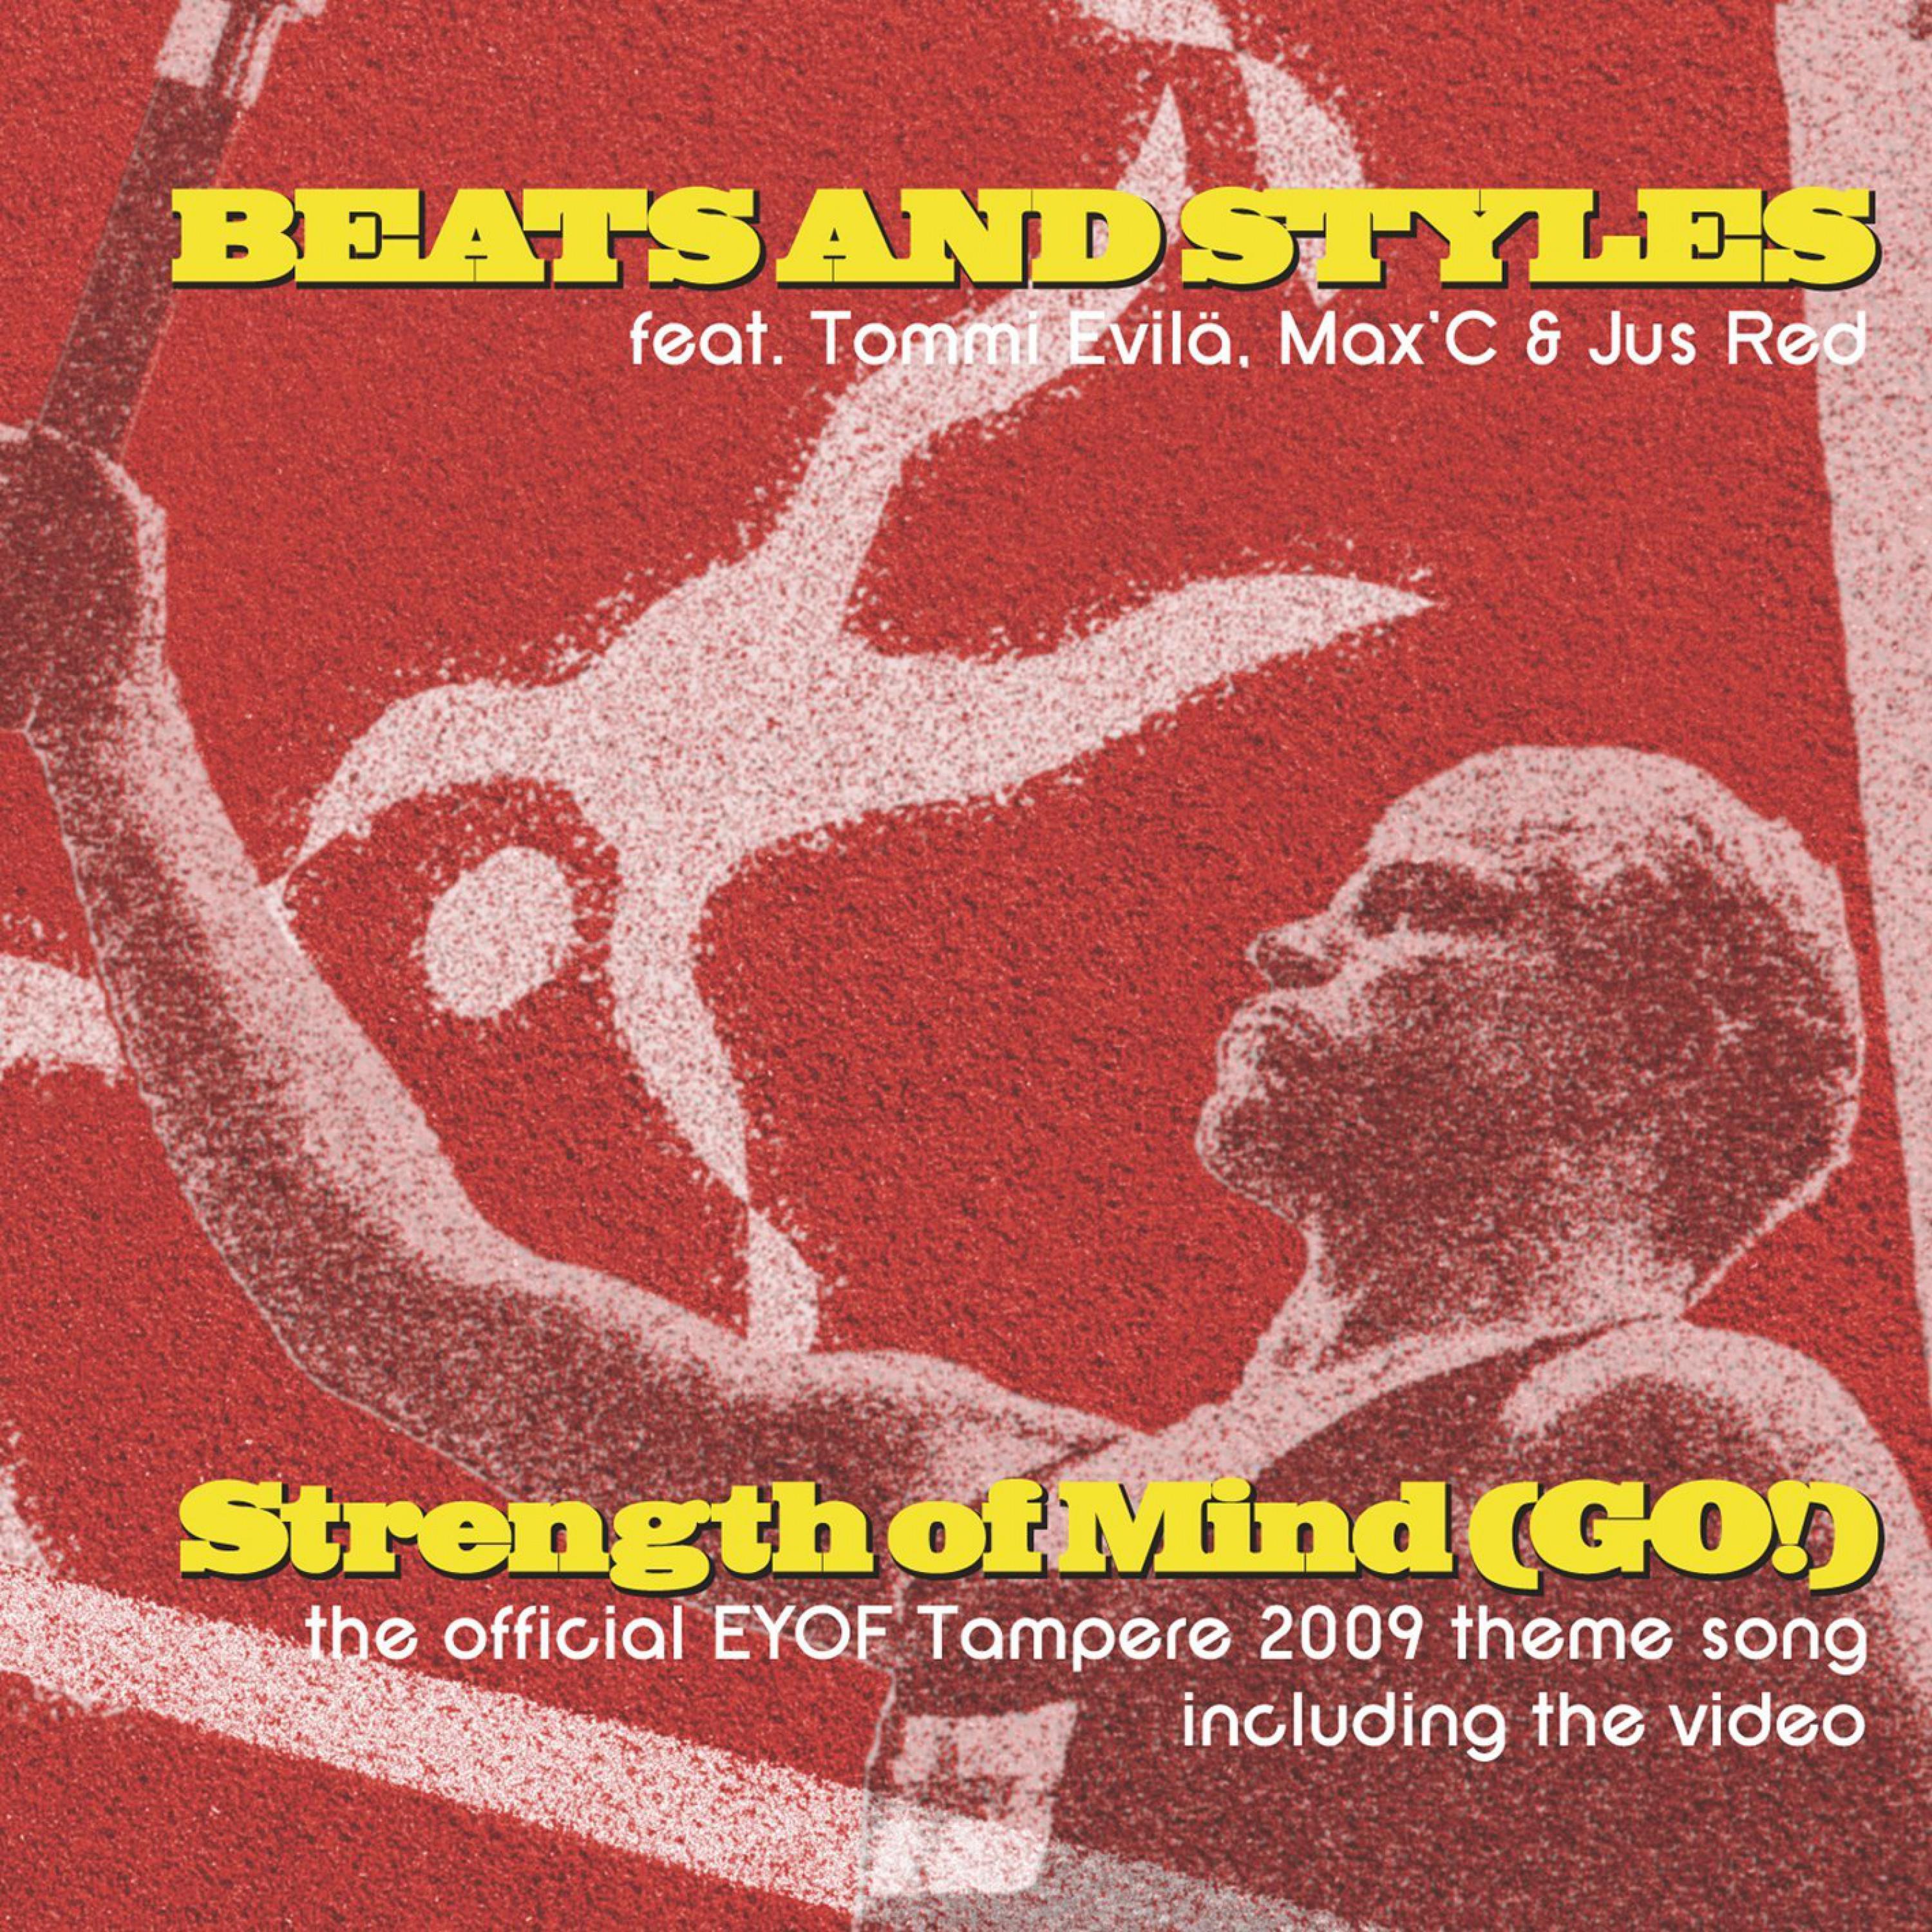 Strength of Mind (Go!) Eyof 2009 Single